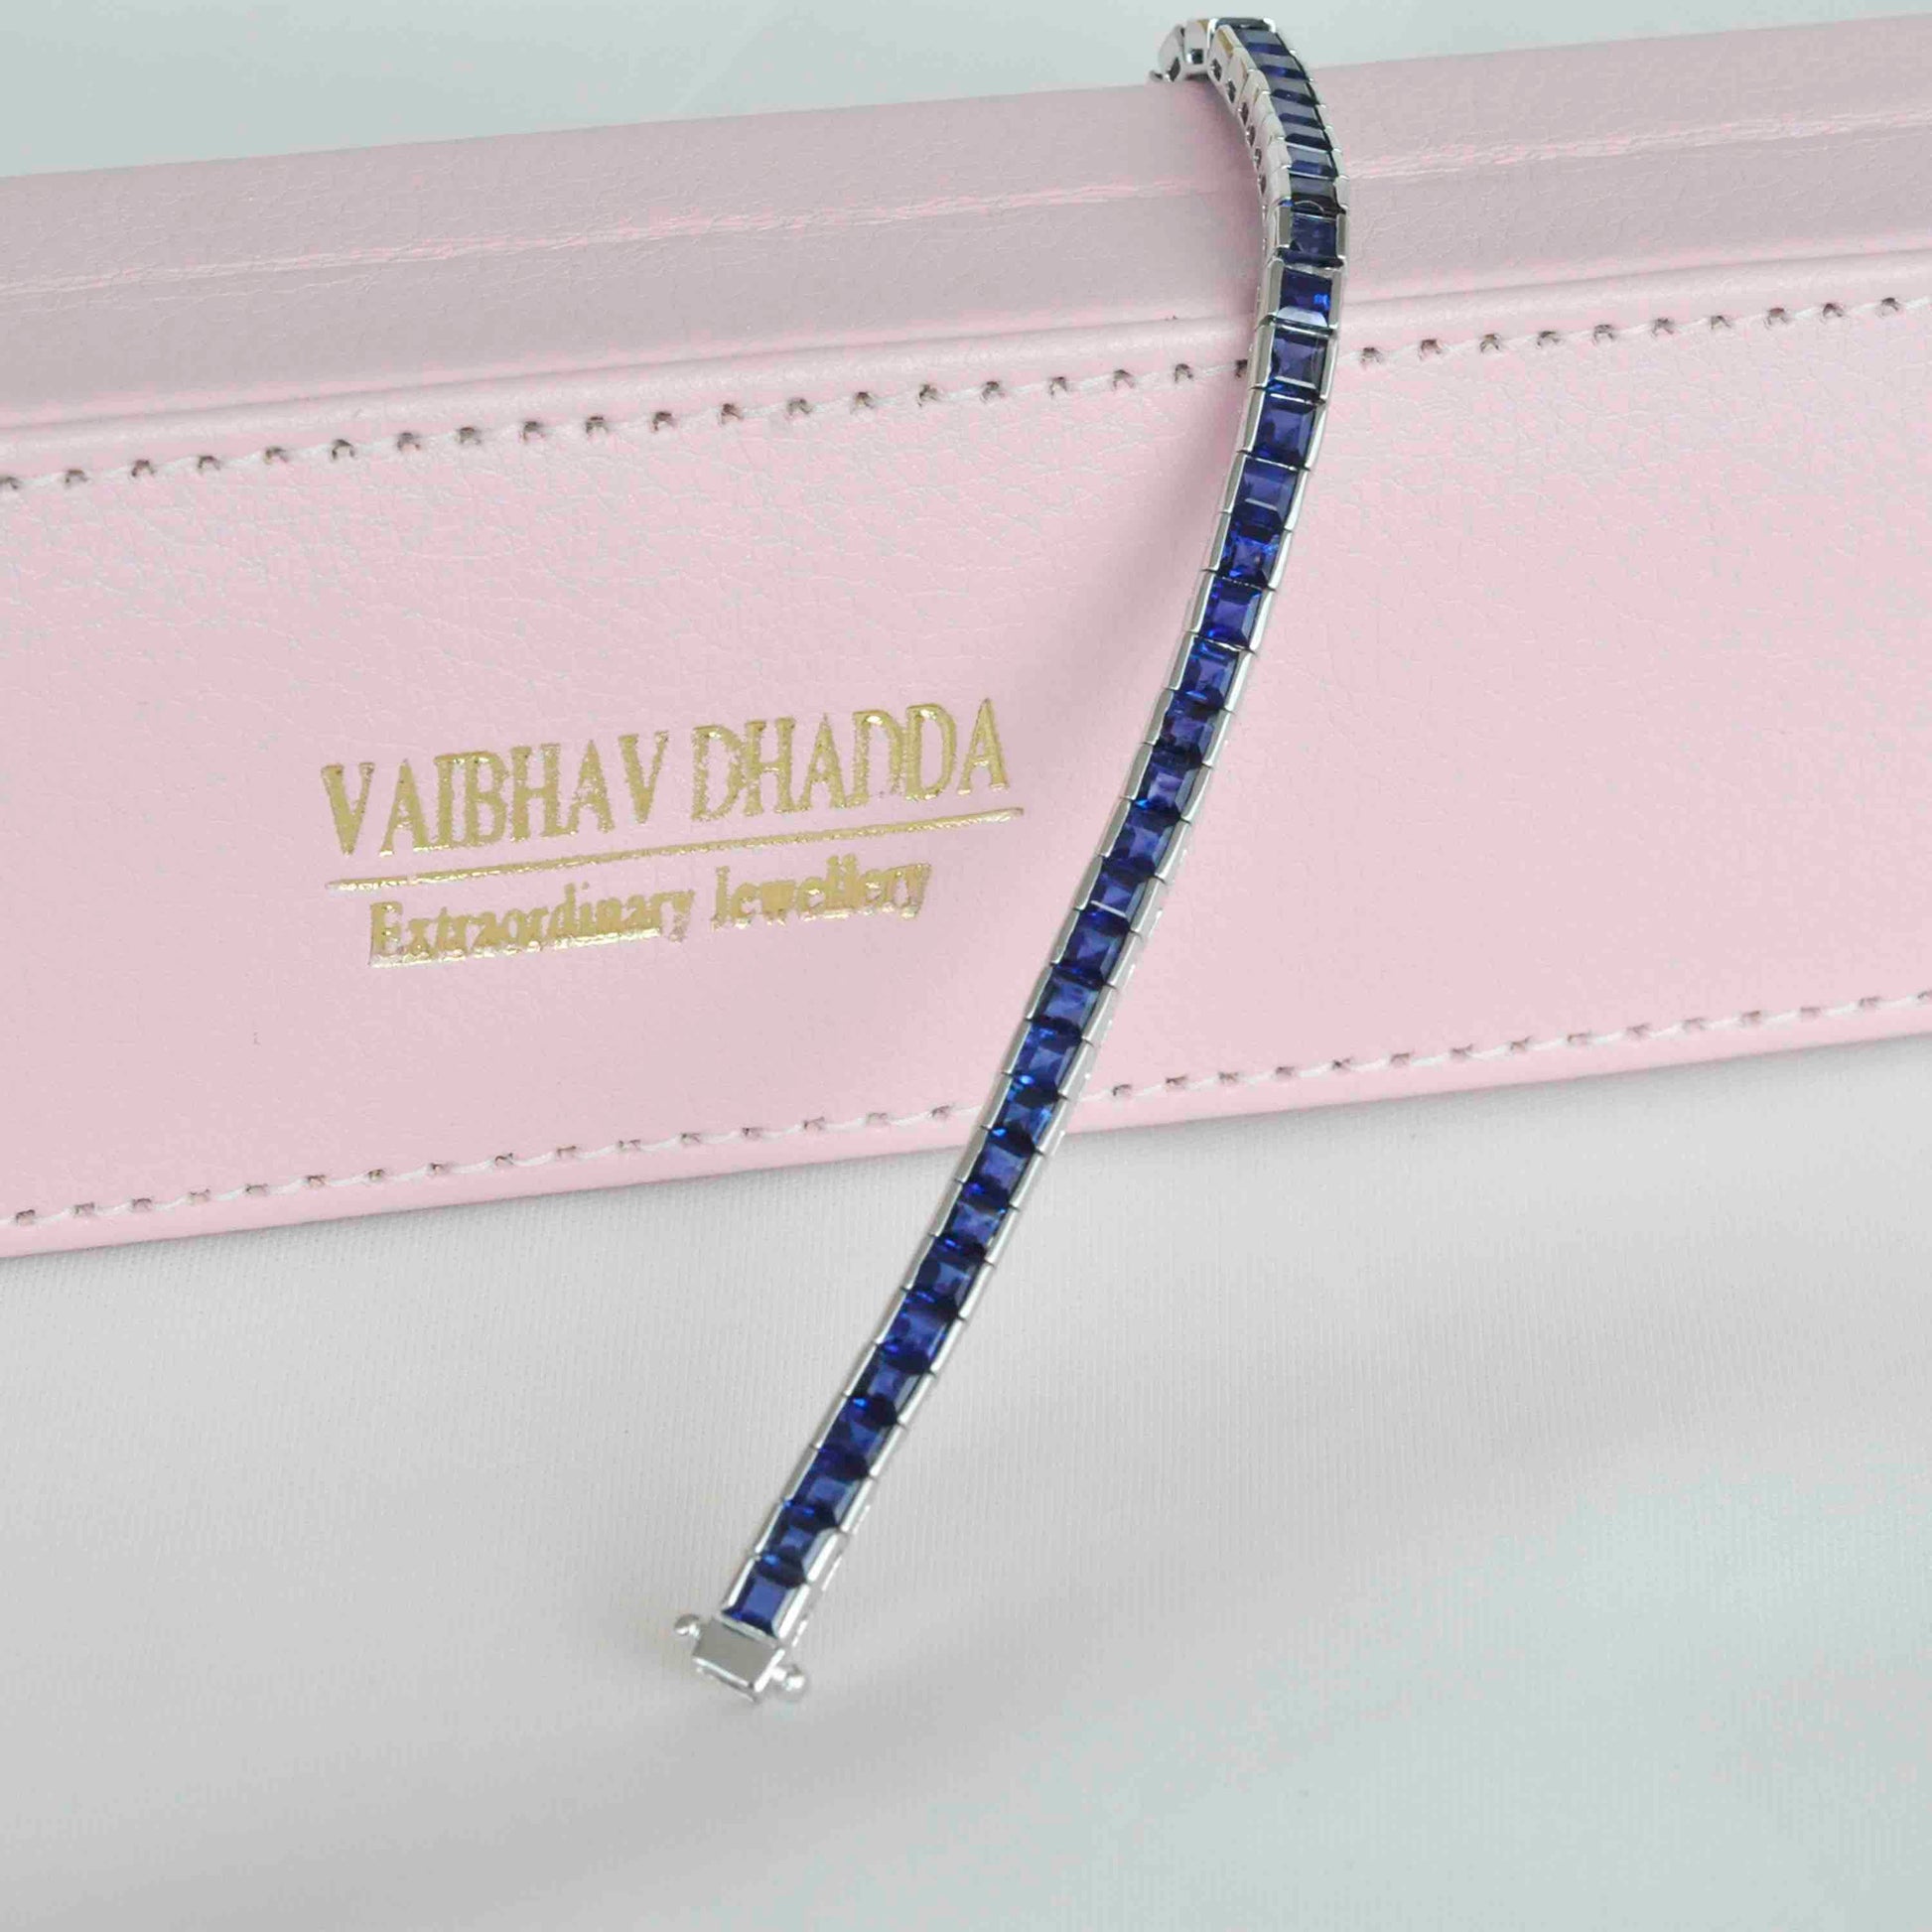 18K White Gold Blue Sapphires Art Deco Tennis Line Bracelet - Vaibhav Dhadda Jewelry